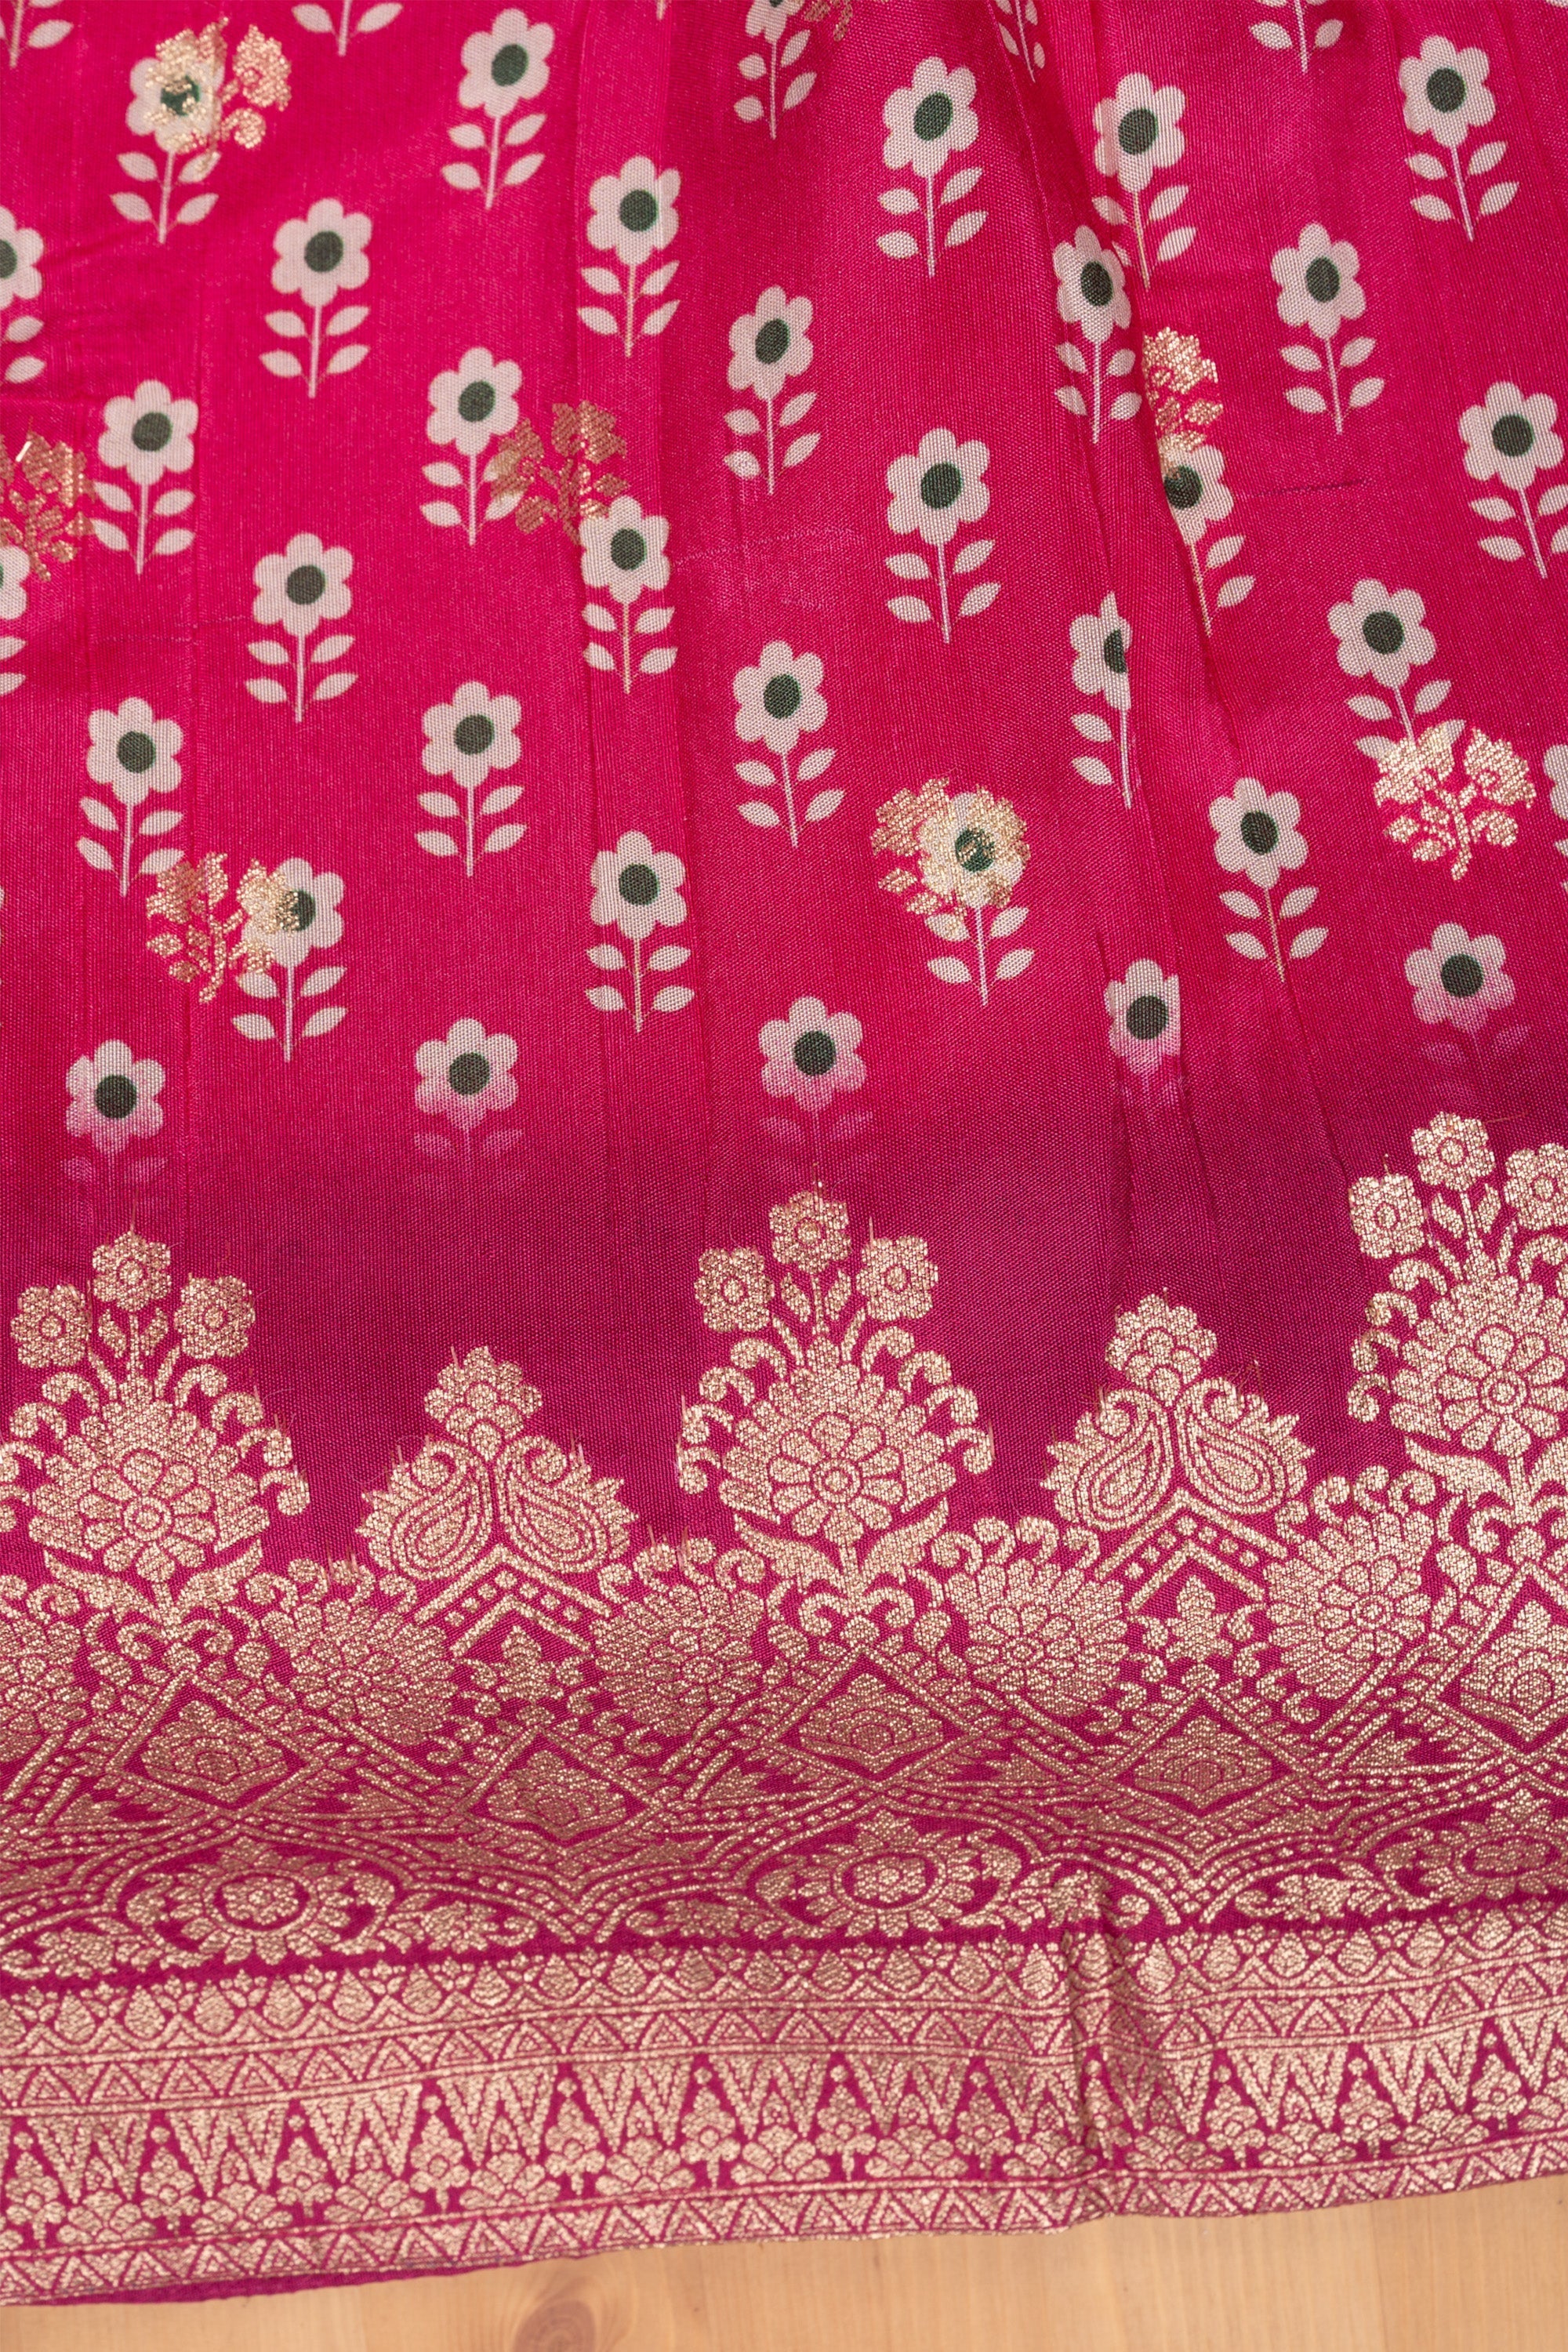 Embroidered Silk Lacha Dress, Handwash, Size: 20 X 30 at Rs 250 in Kolkata